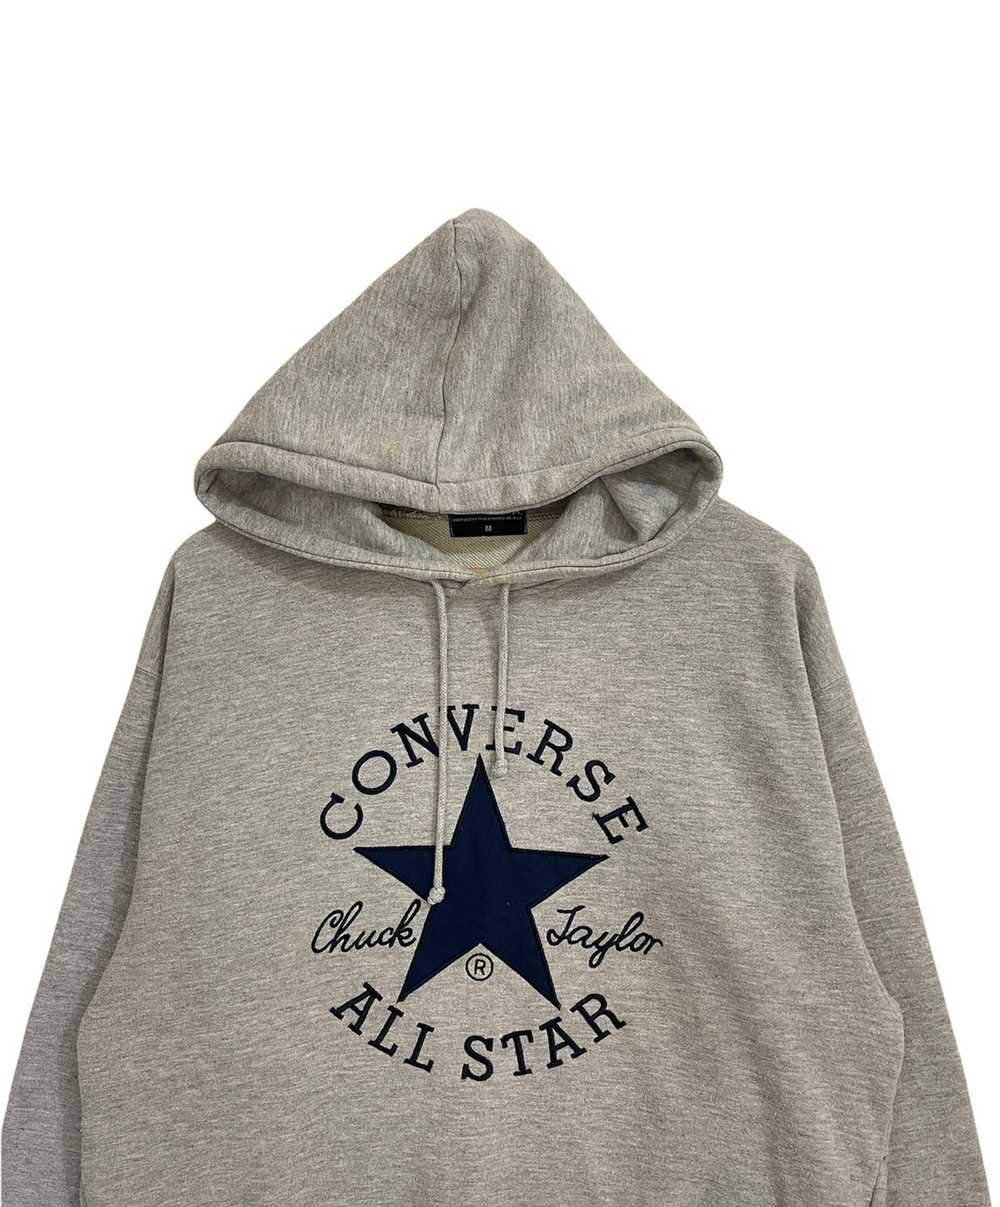 Vintage - converse hoodie embroidered logo - image 3